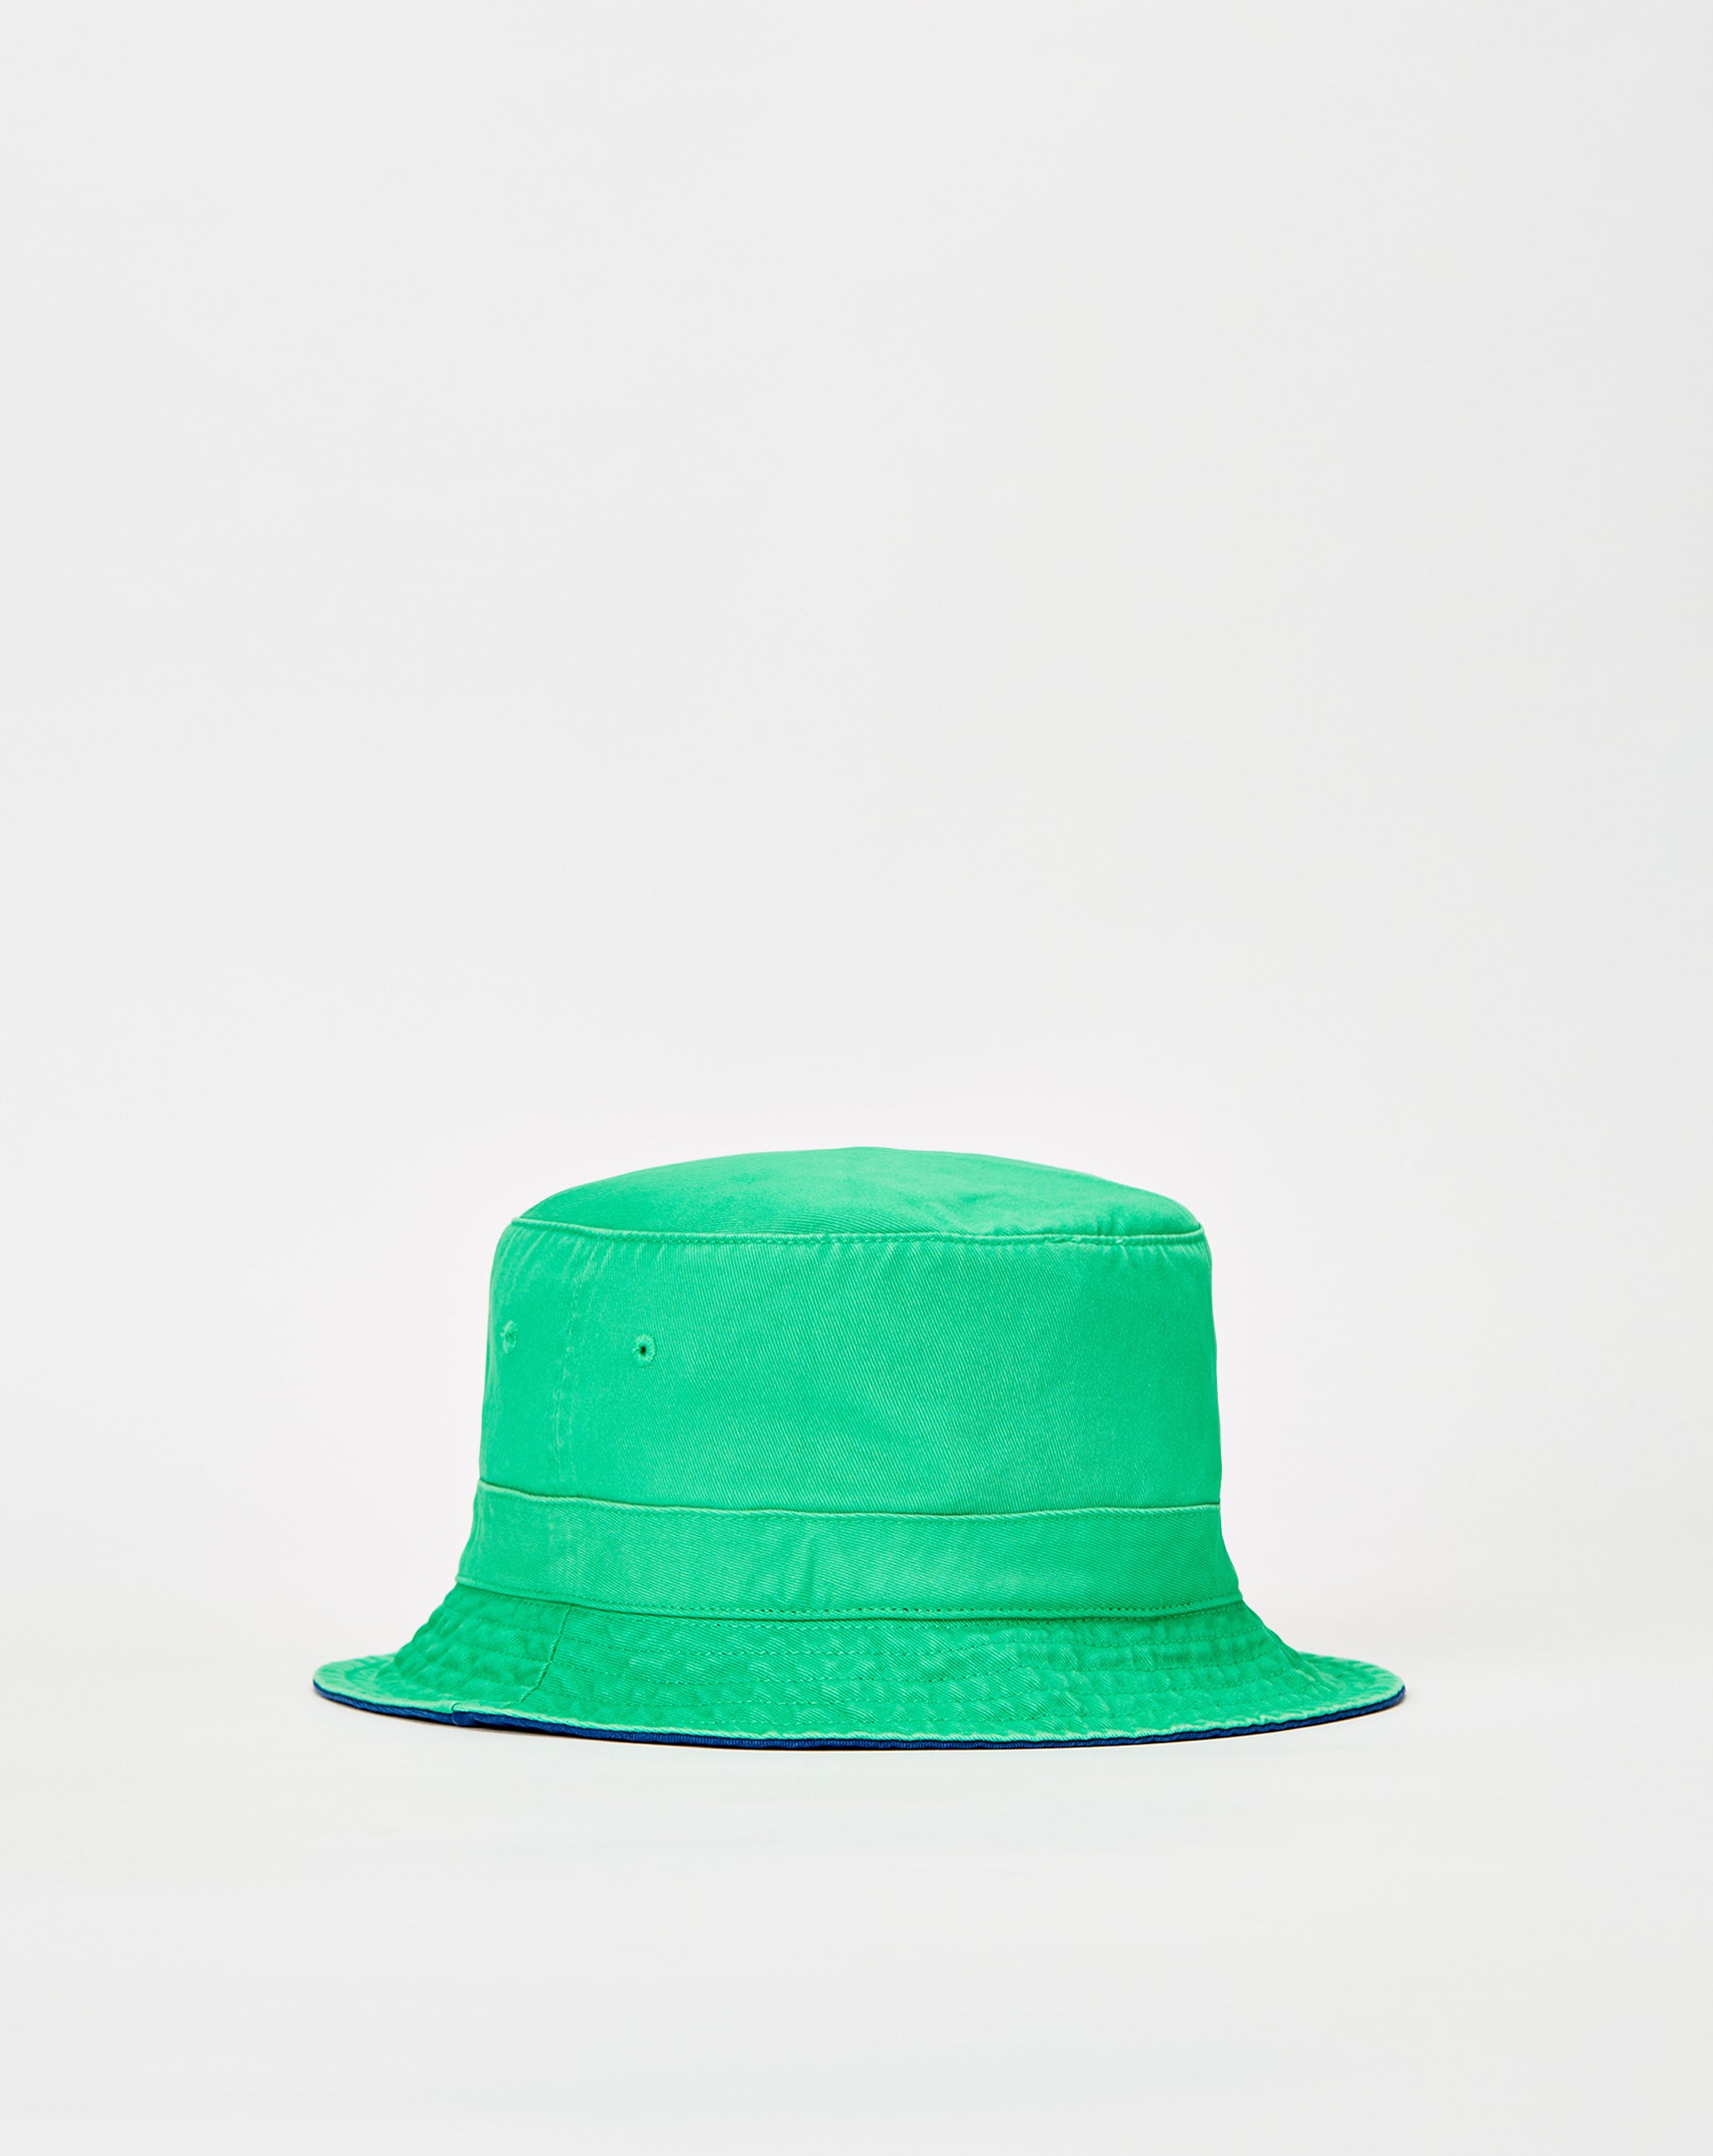 Polo Ralph Lauren Chino Loft Bucket Hat - Rule of Next Accessories